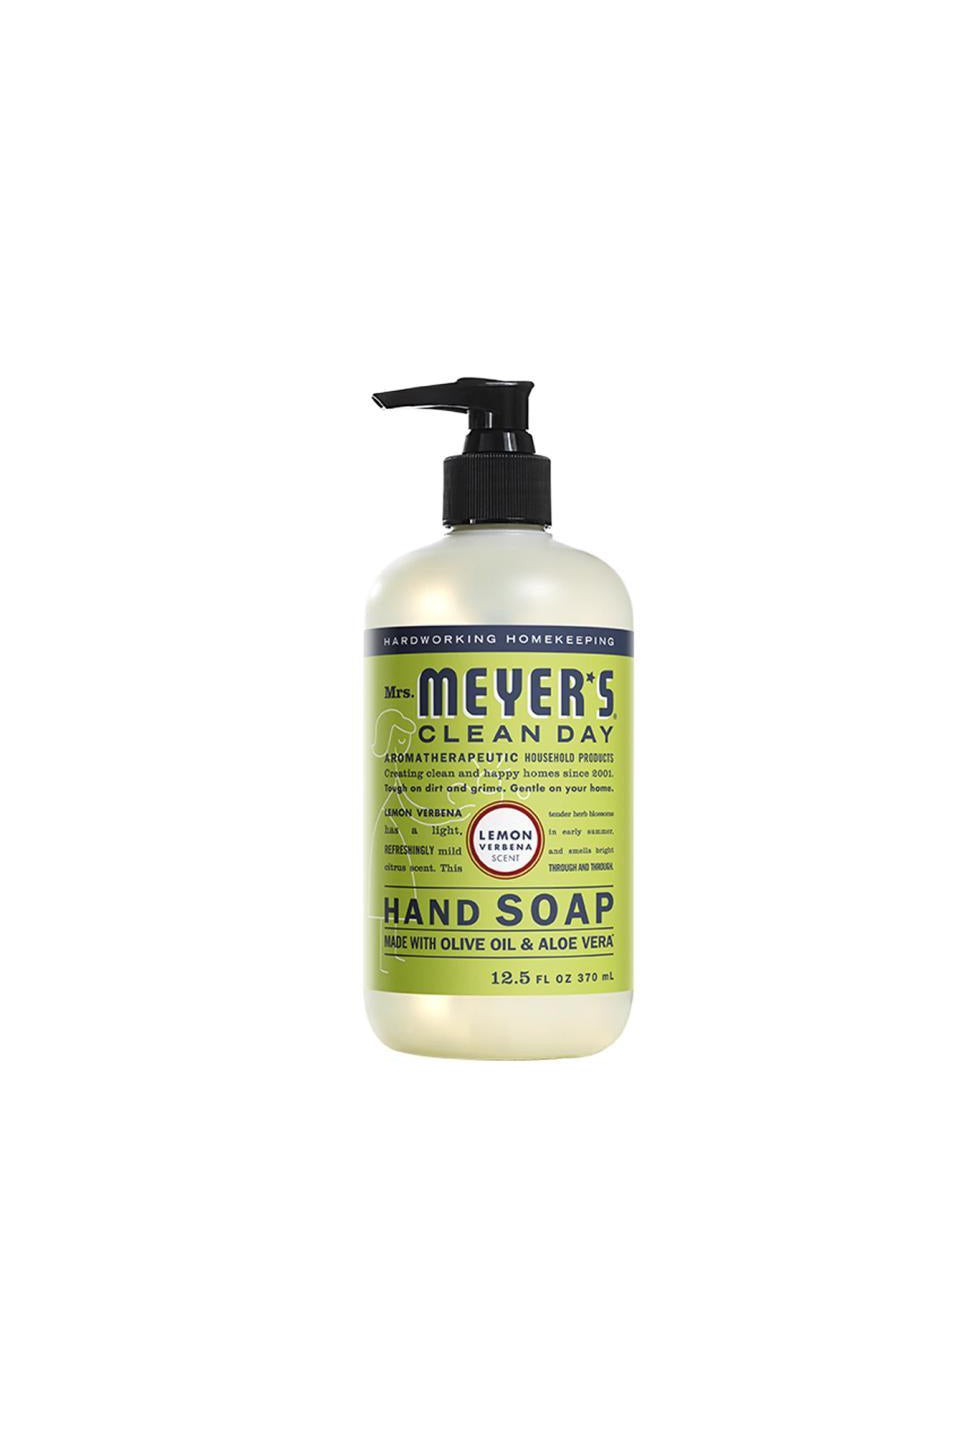 Mrs Meyer's Clean Day Hand Soap Lemon Verbena 370ml